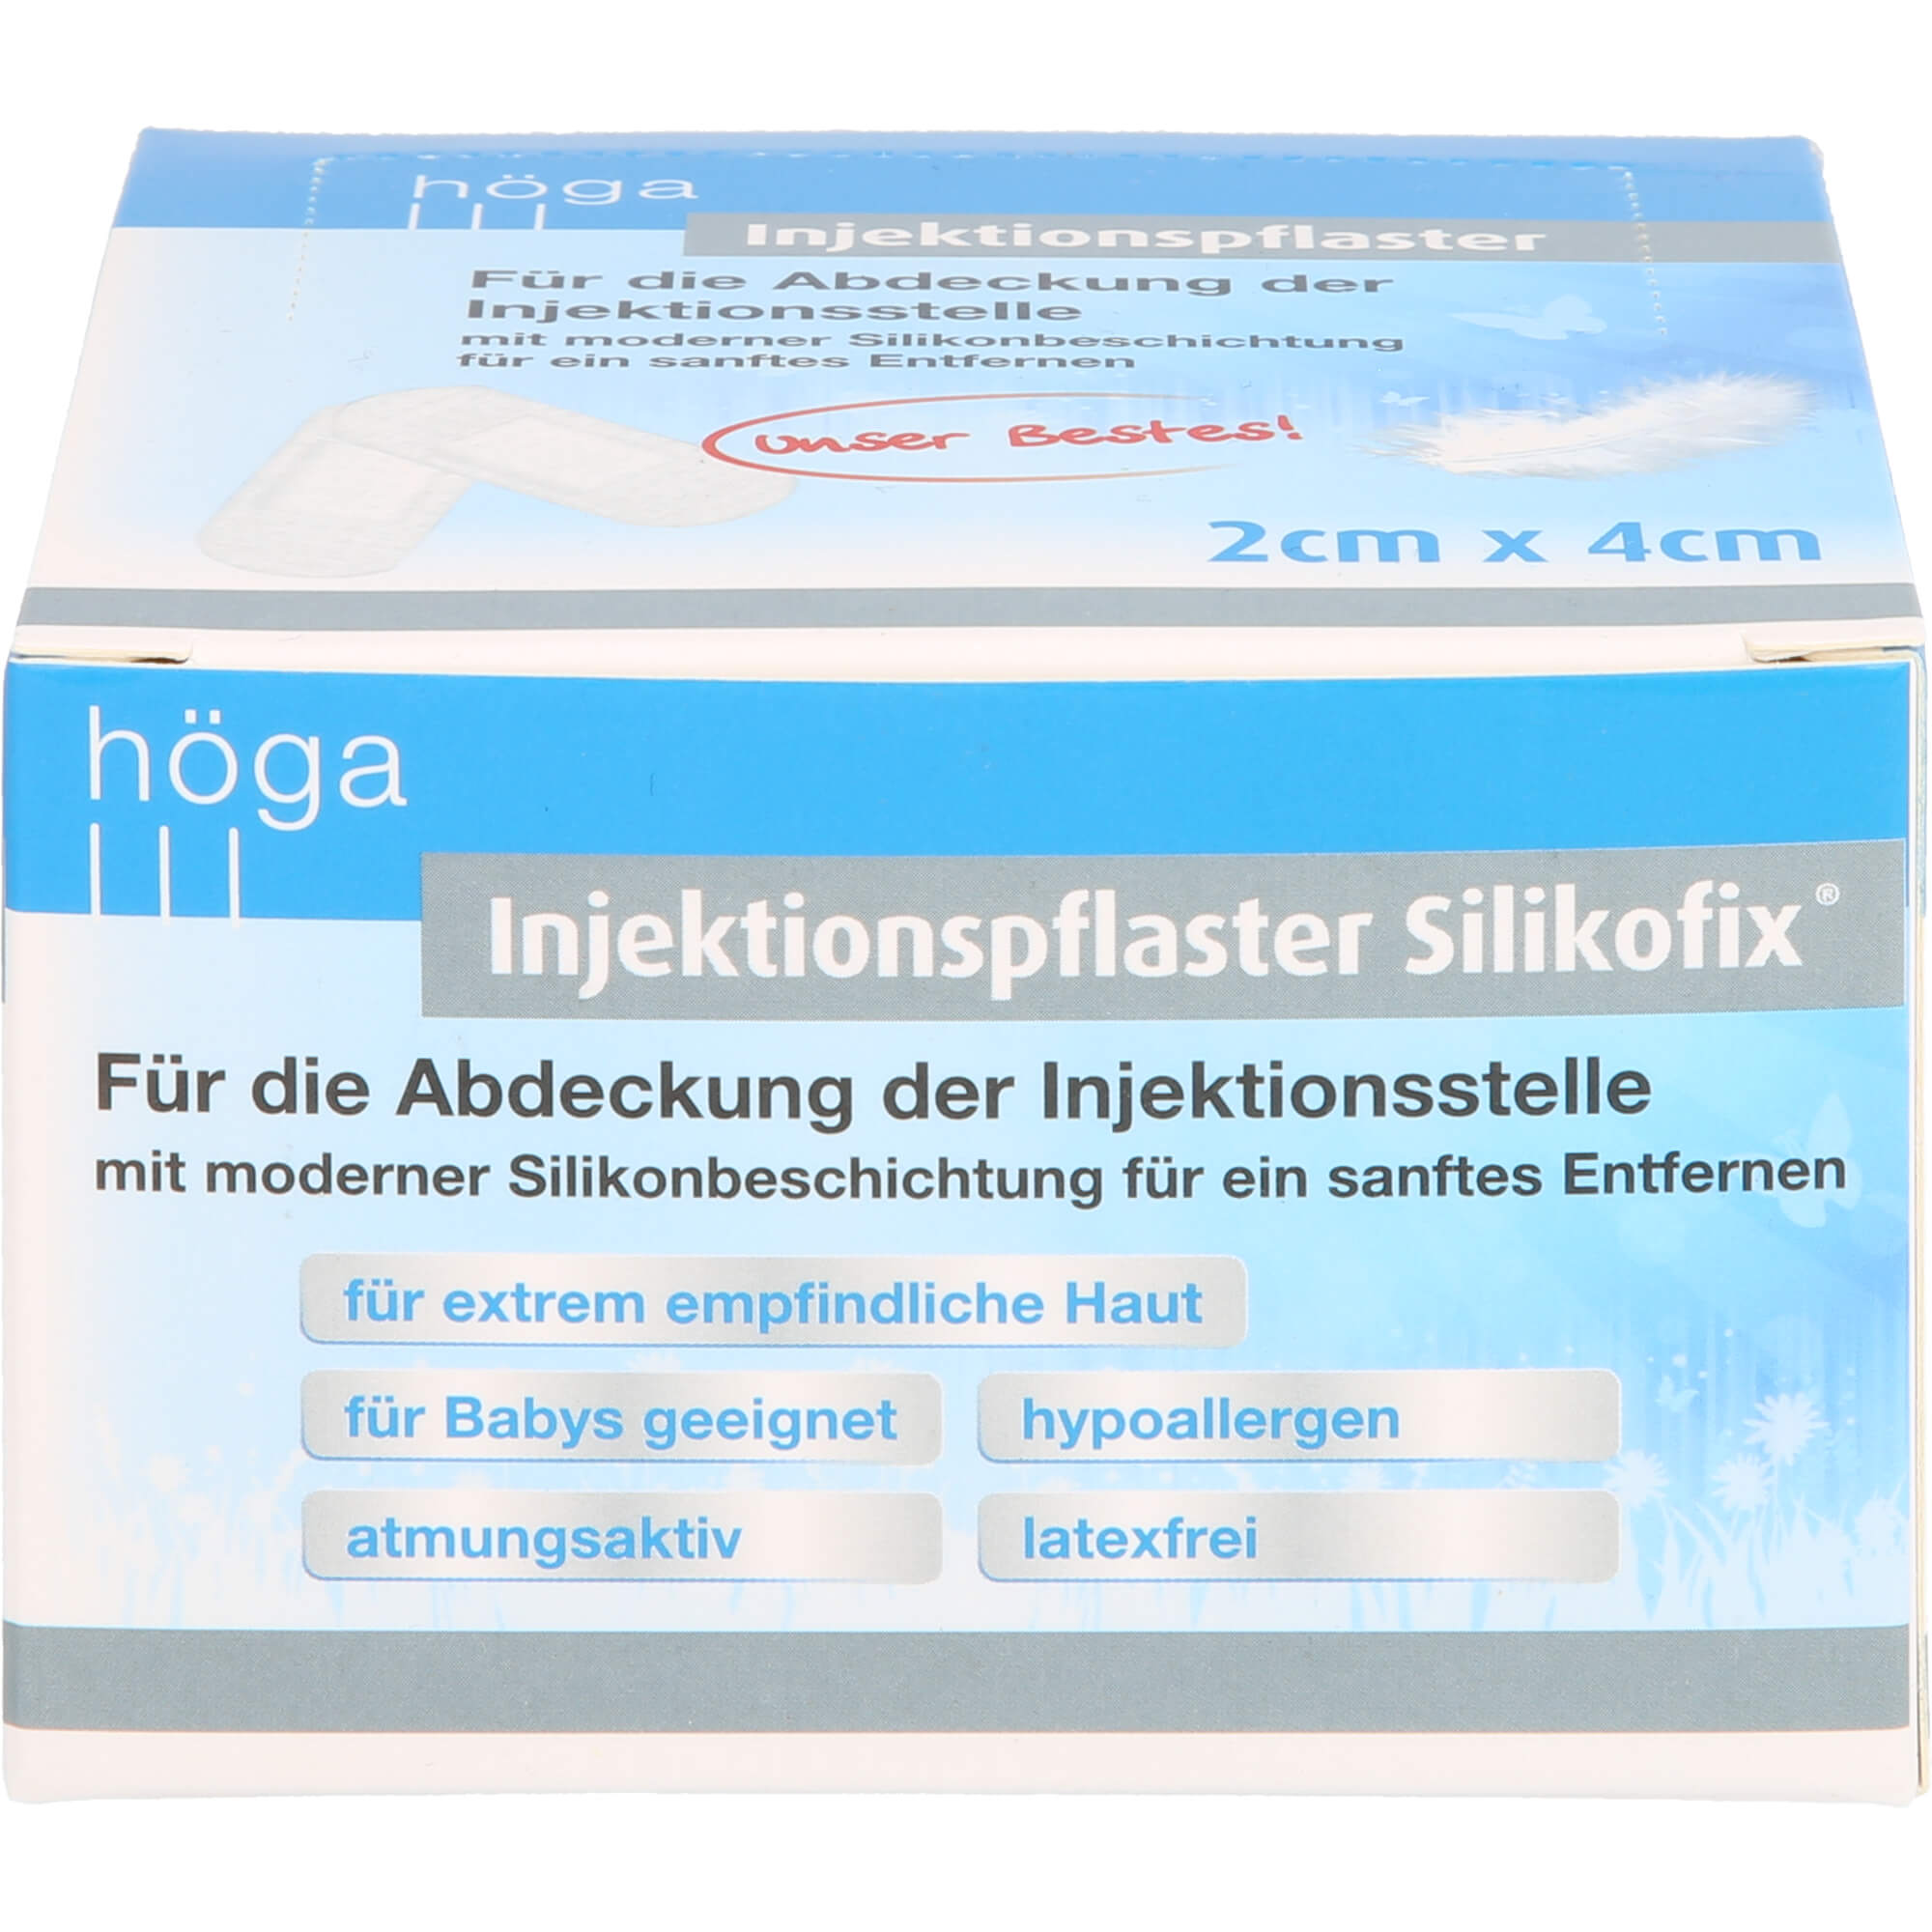 INJEKTIONSPFLASTER Silikofix 2x4 cm Höga